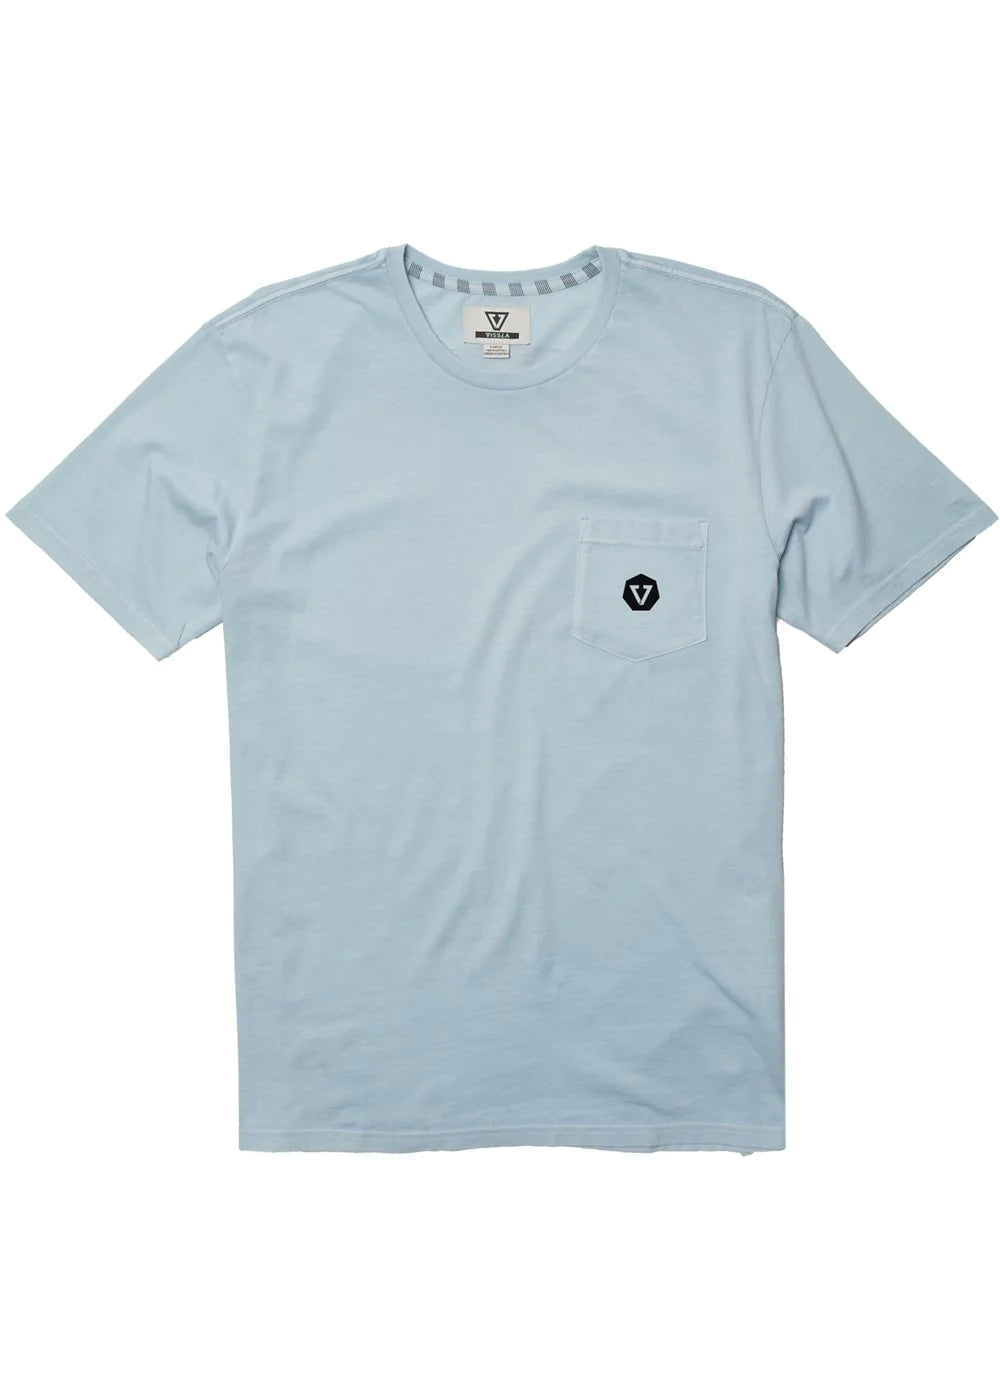 Vissla Offshored SS Pocket T Shirt - Ice Blue Mens T Shirt